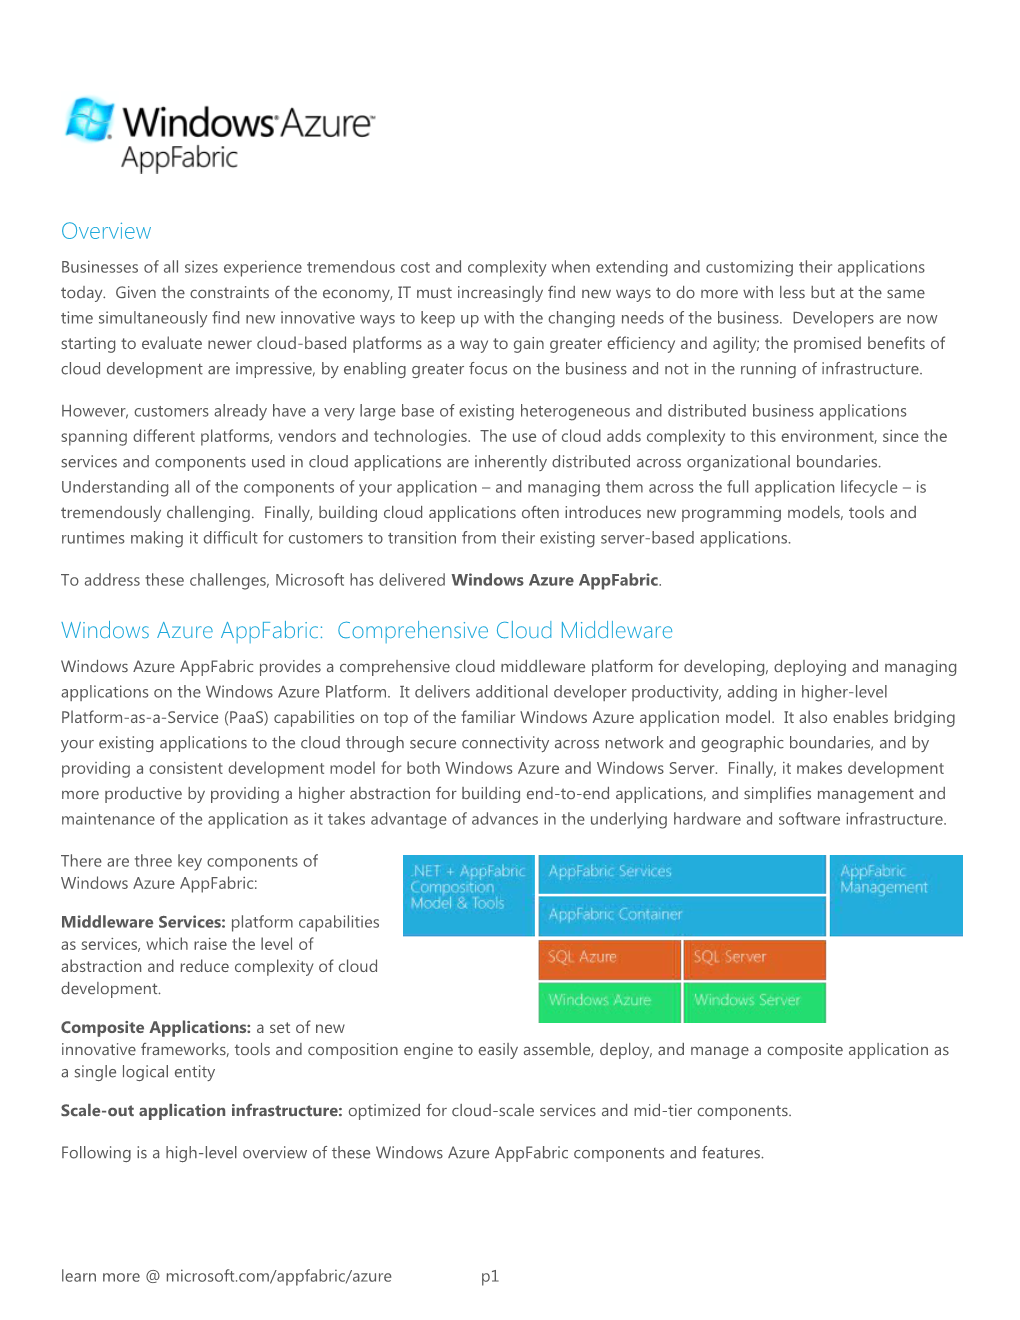 Windows Azure Appfabric: Comprehensive Cloud Middleware